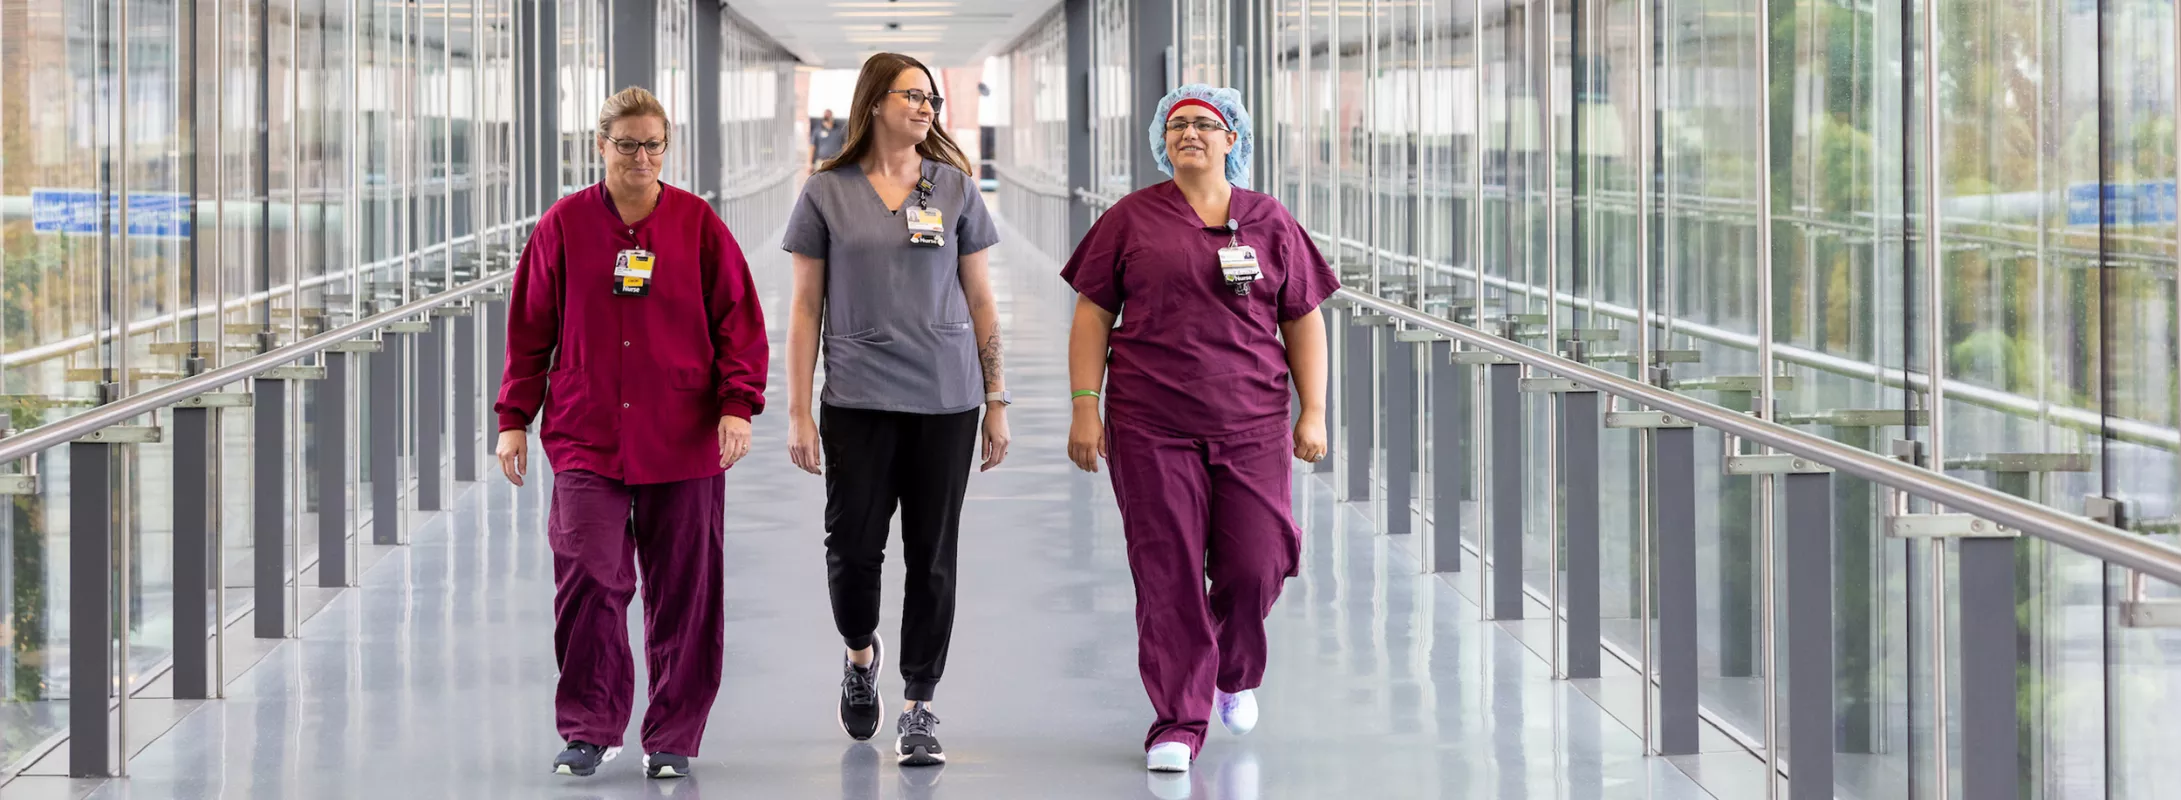 AED nurses walking down the skywalk